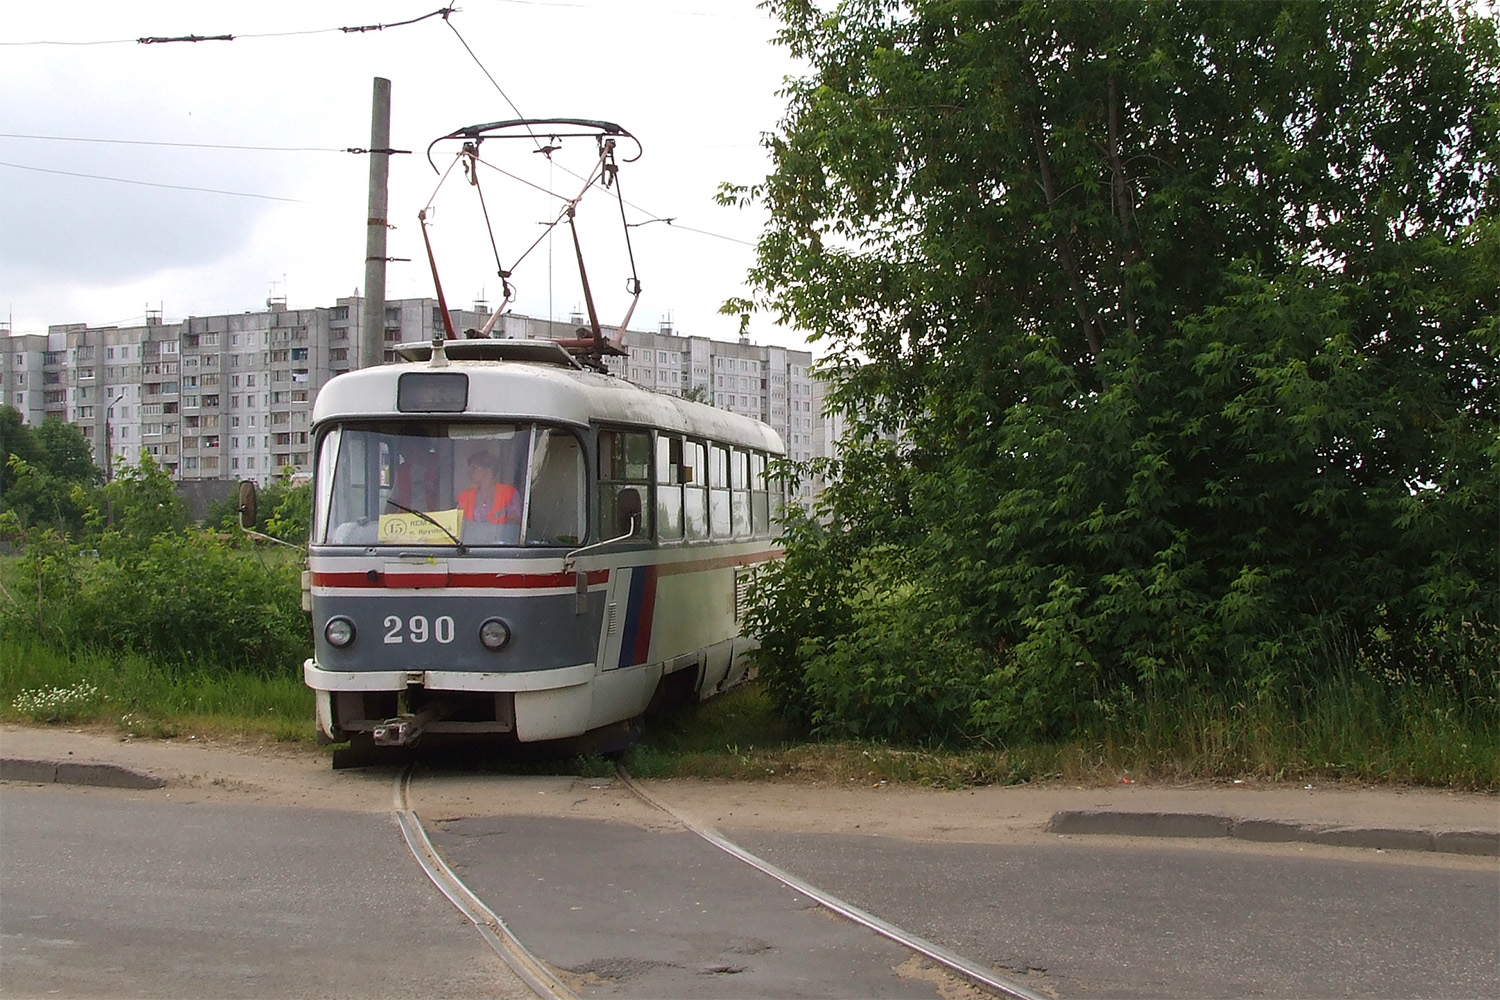 Tver, Tatra T3SU № 290; Tver — Tver tramway in the early 2000s (2002 — 2006)